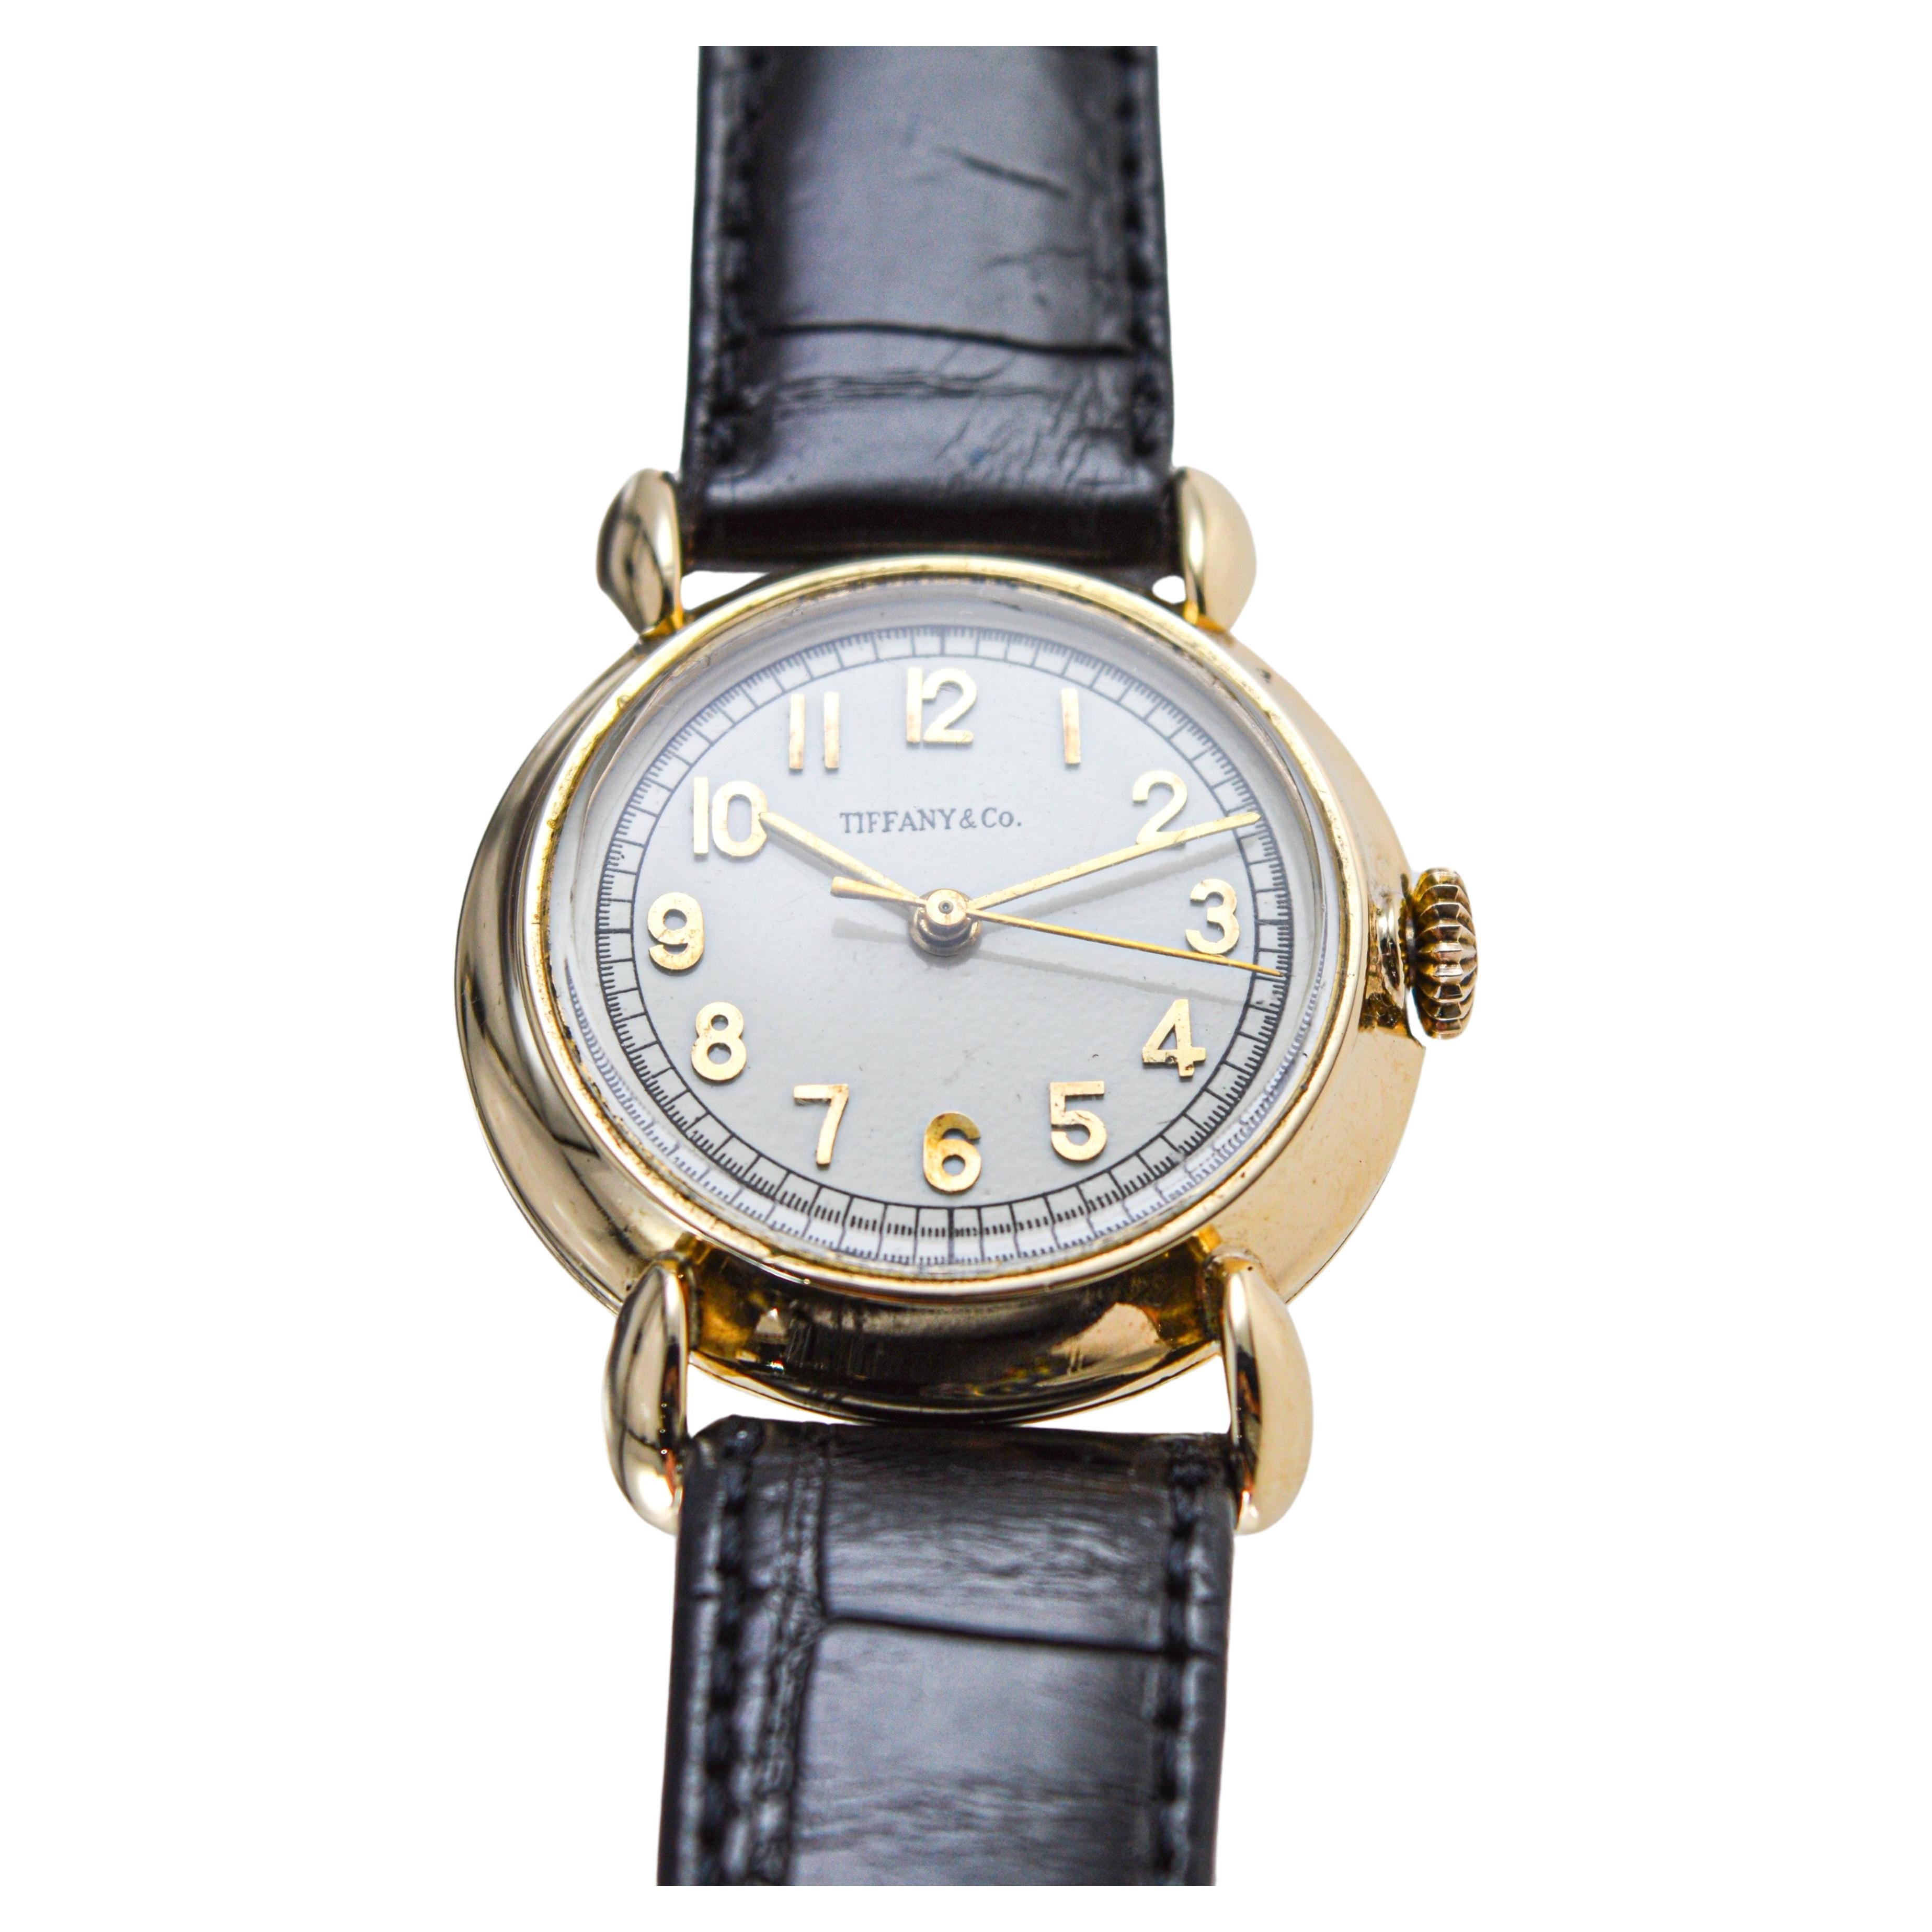 Tiffany & Co. by Schaffhausen International Watch Company Art Deco Style Watch For Sale 5